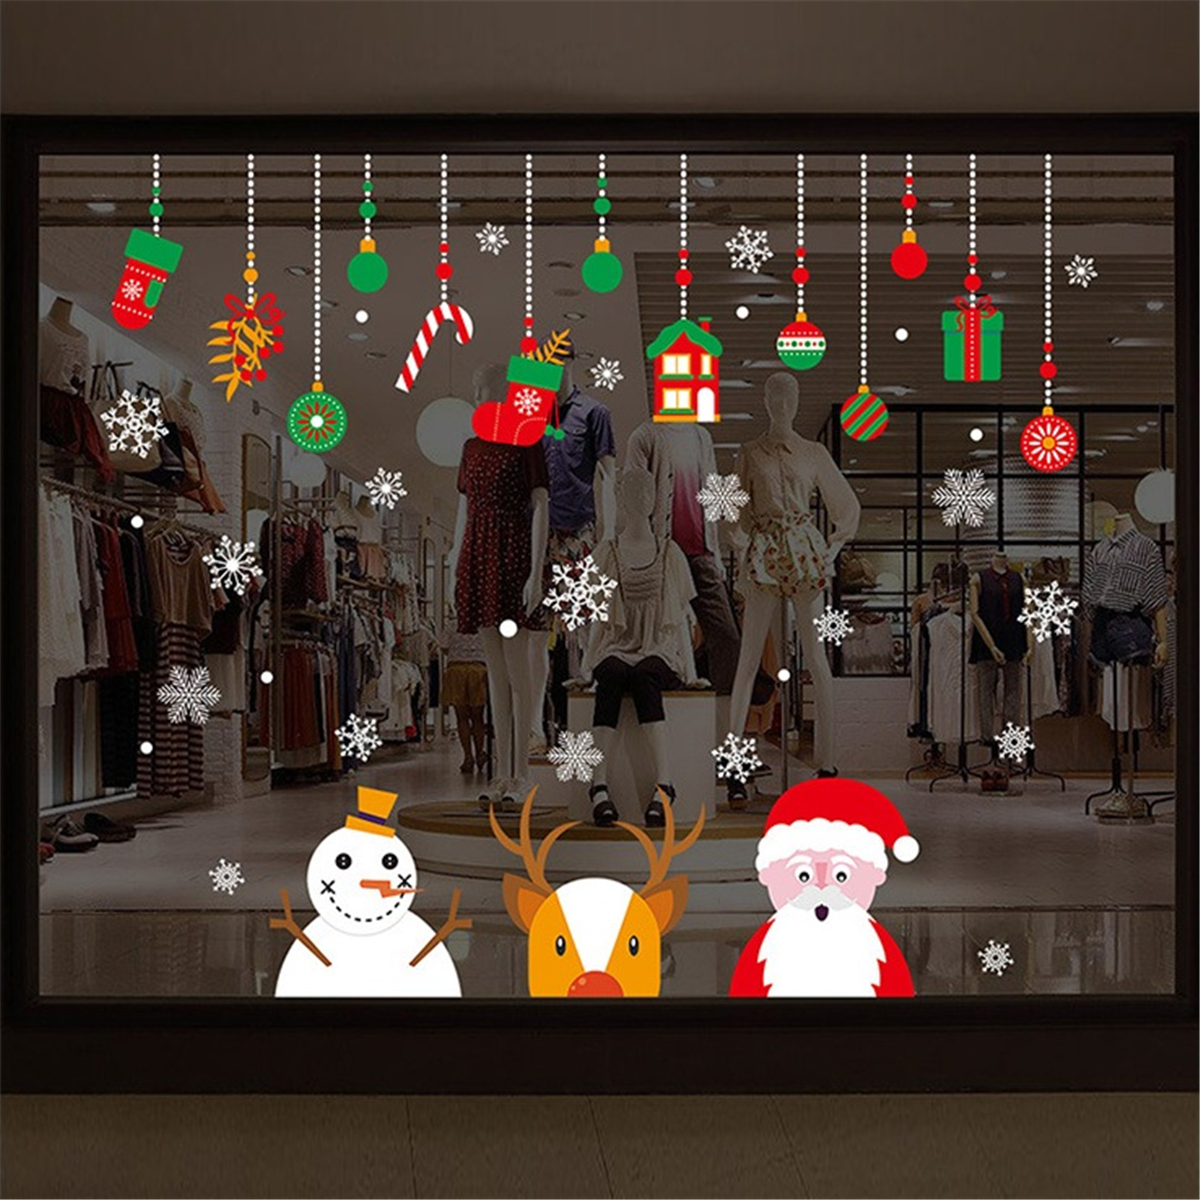 

Christmas Window Wall Sticker Snowman Santa Snowflake Reindeer Removable Home Decor